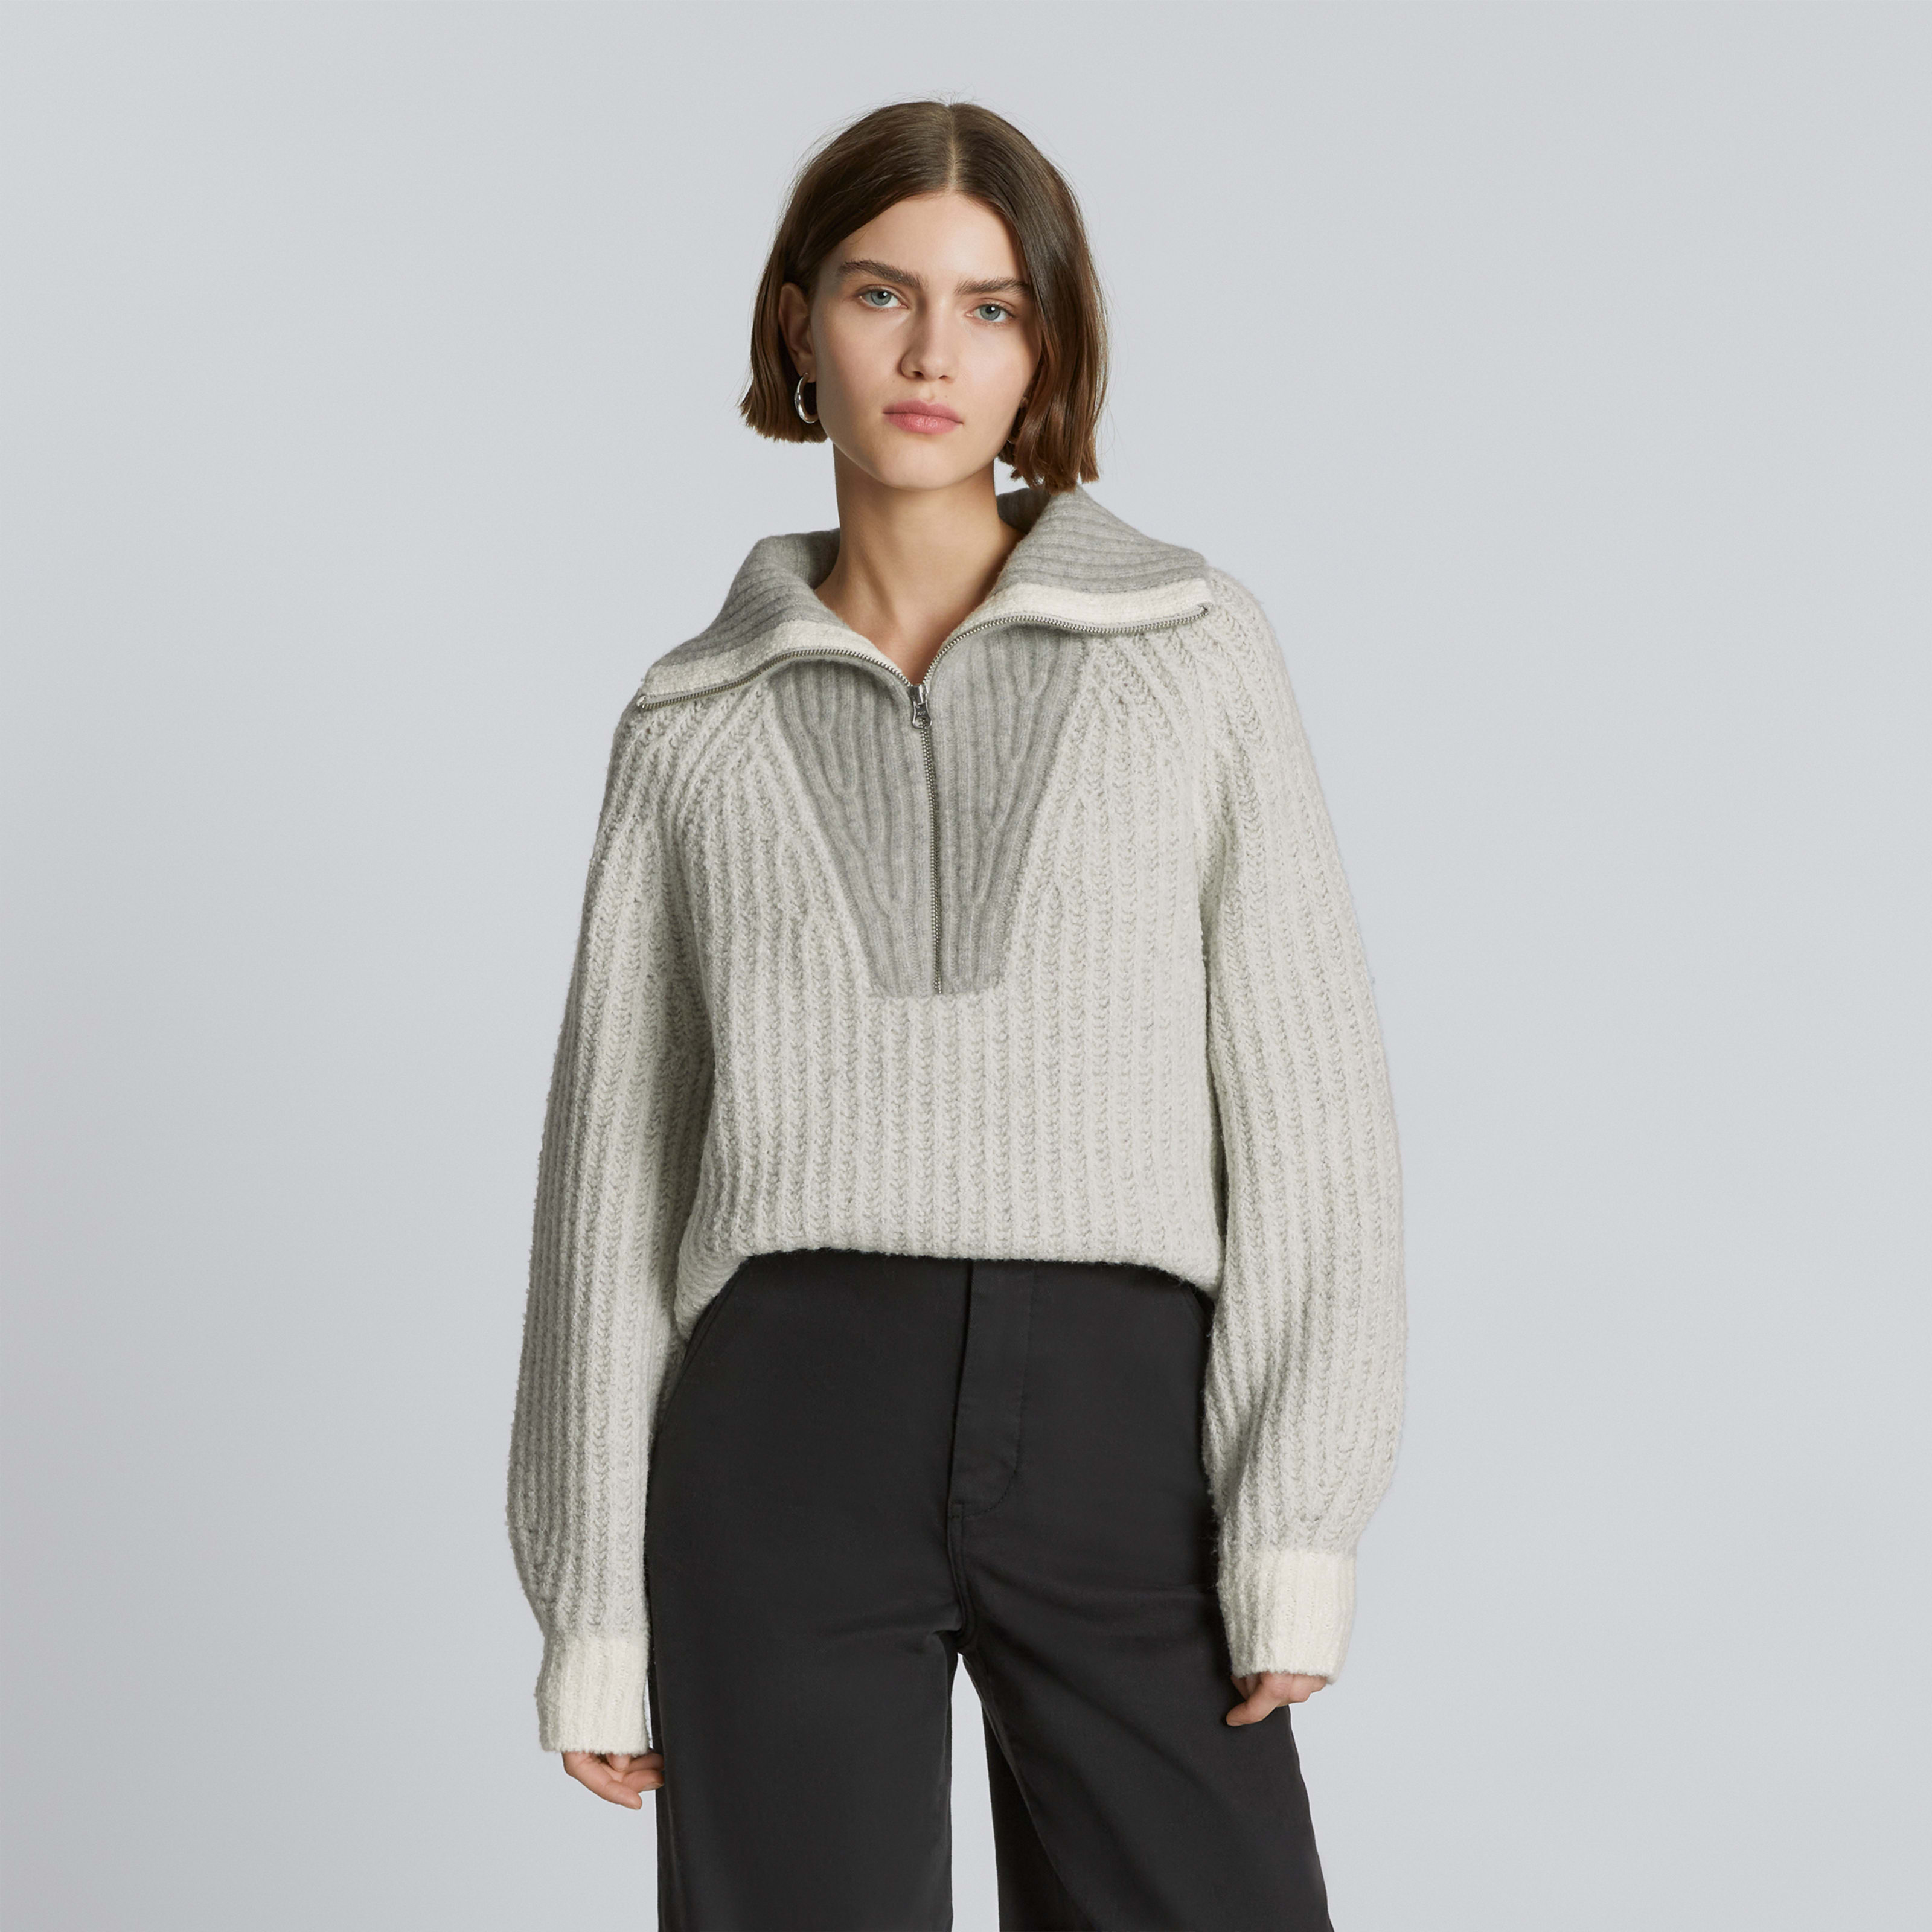 Women's Luxe Teddy Oversized Half Zip Sweater by Everlane in Canvas Tan/Heather Grey, Size XXS